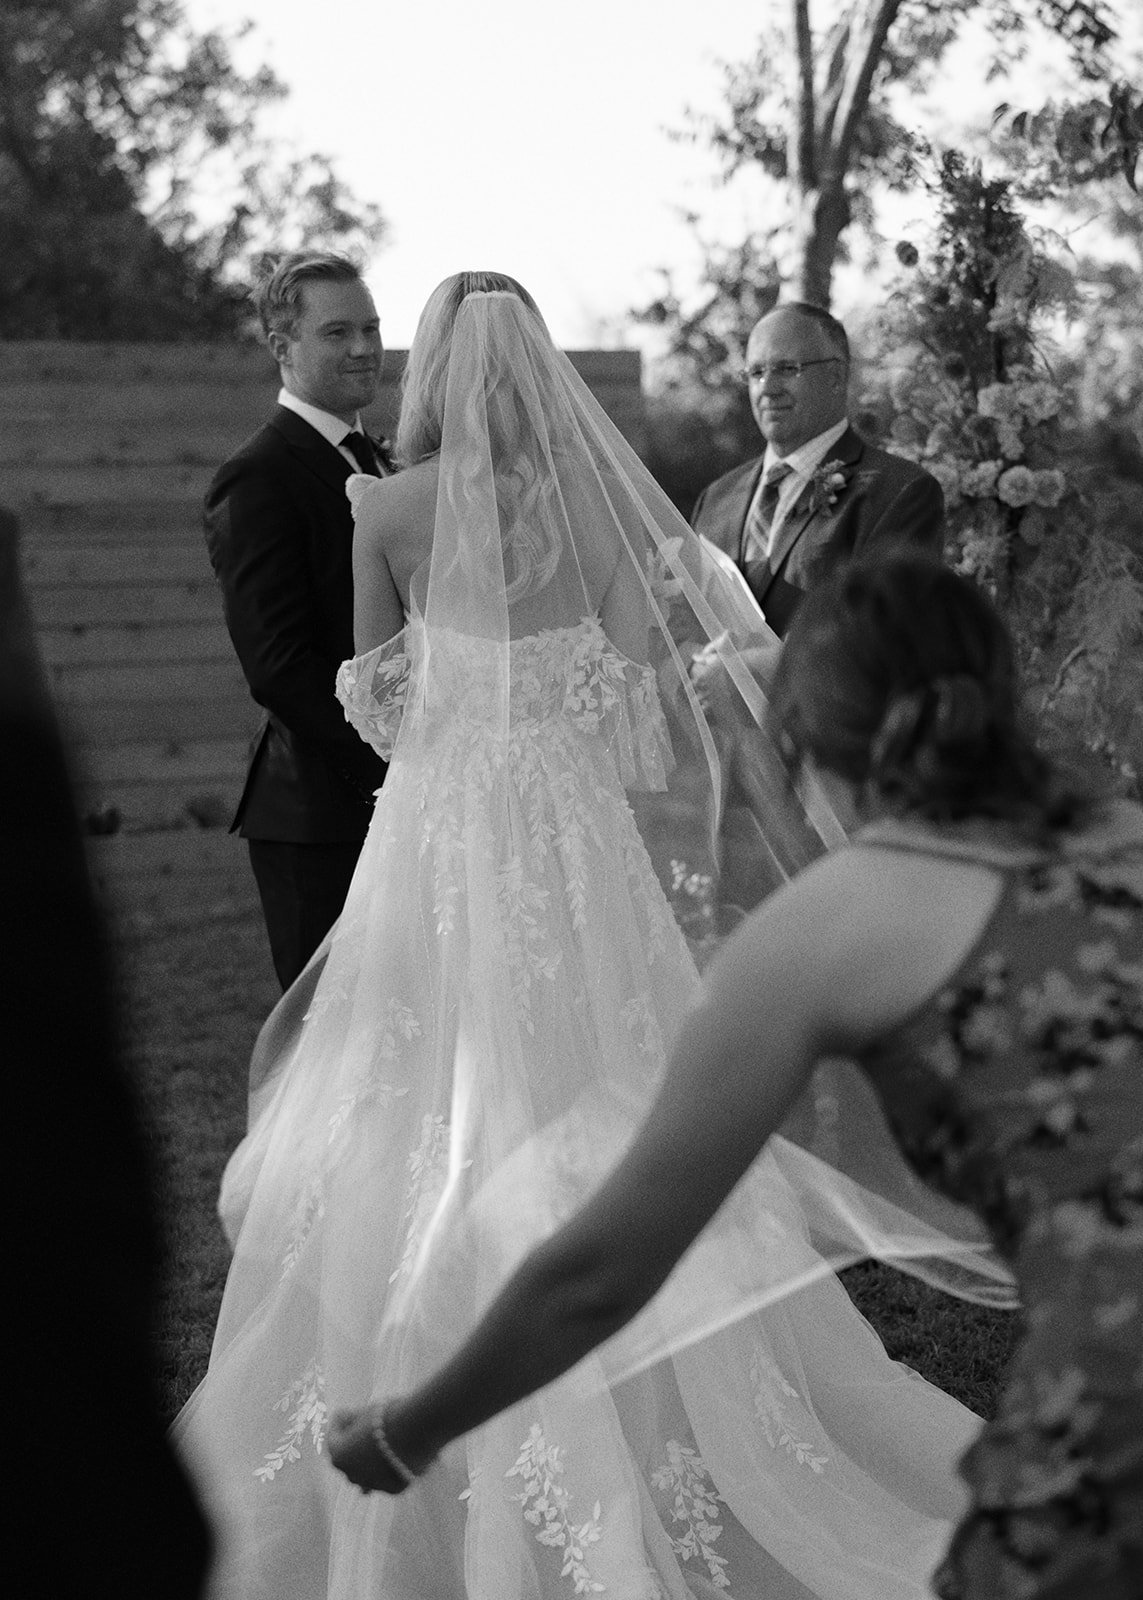 Best-Austin-Wedding-Photographers-Elopement-Film-35mm-Asheville-Santa-Barbara-Backyard-31.jpg